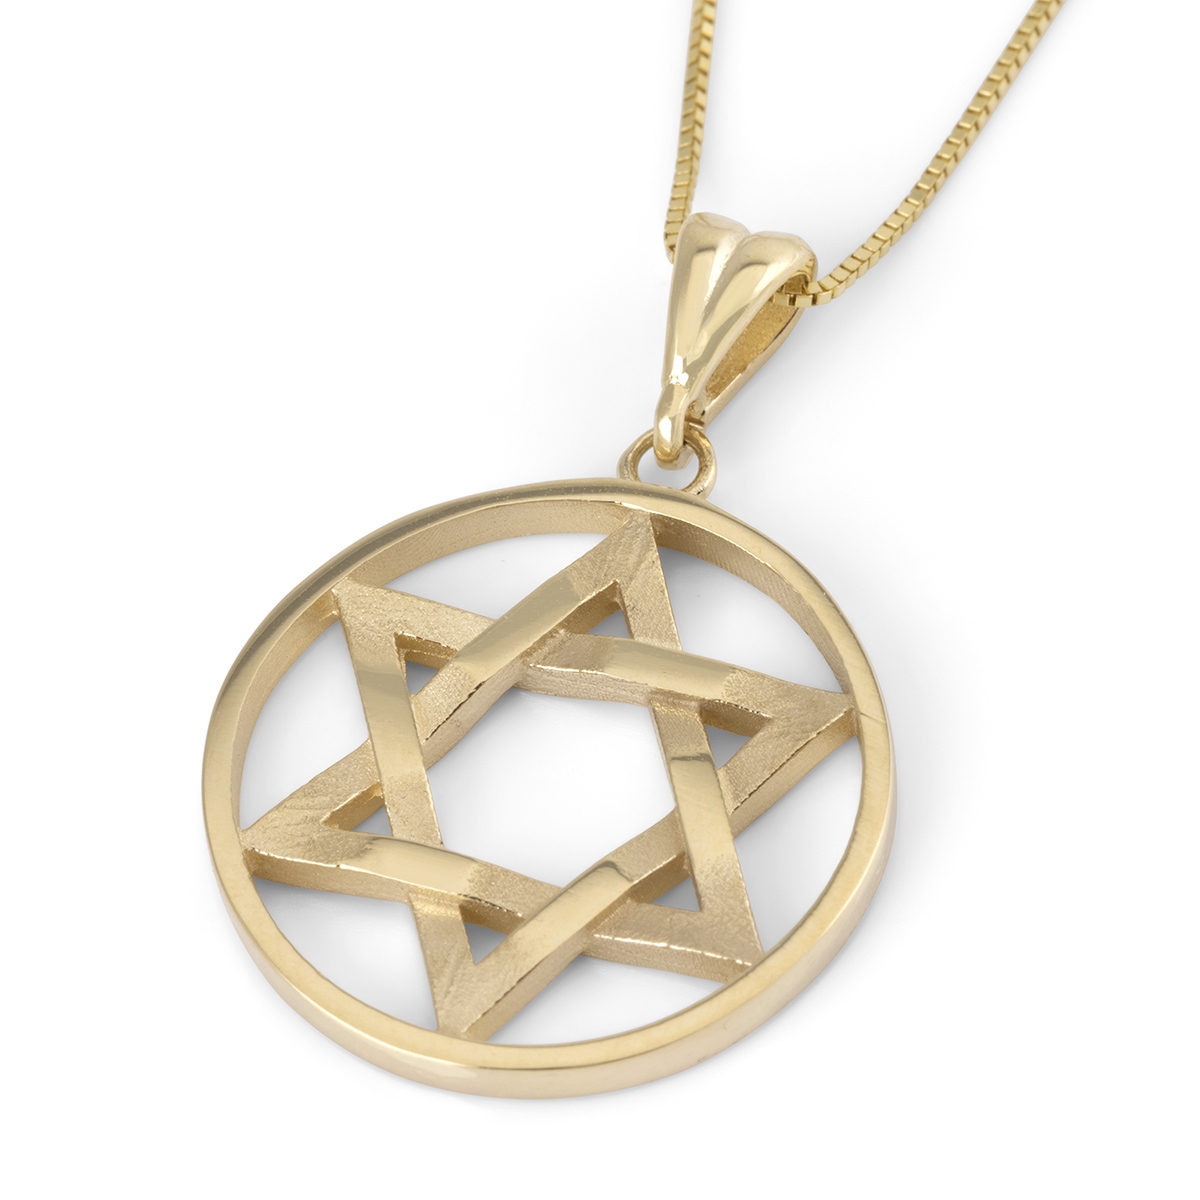 Chic Interlocking Star of David 14K Gold Pendant Necklace - 1